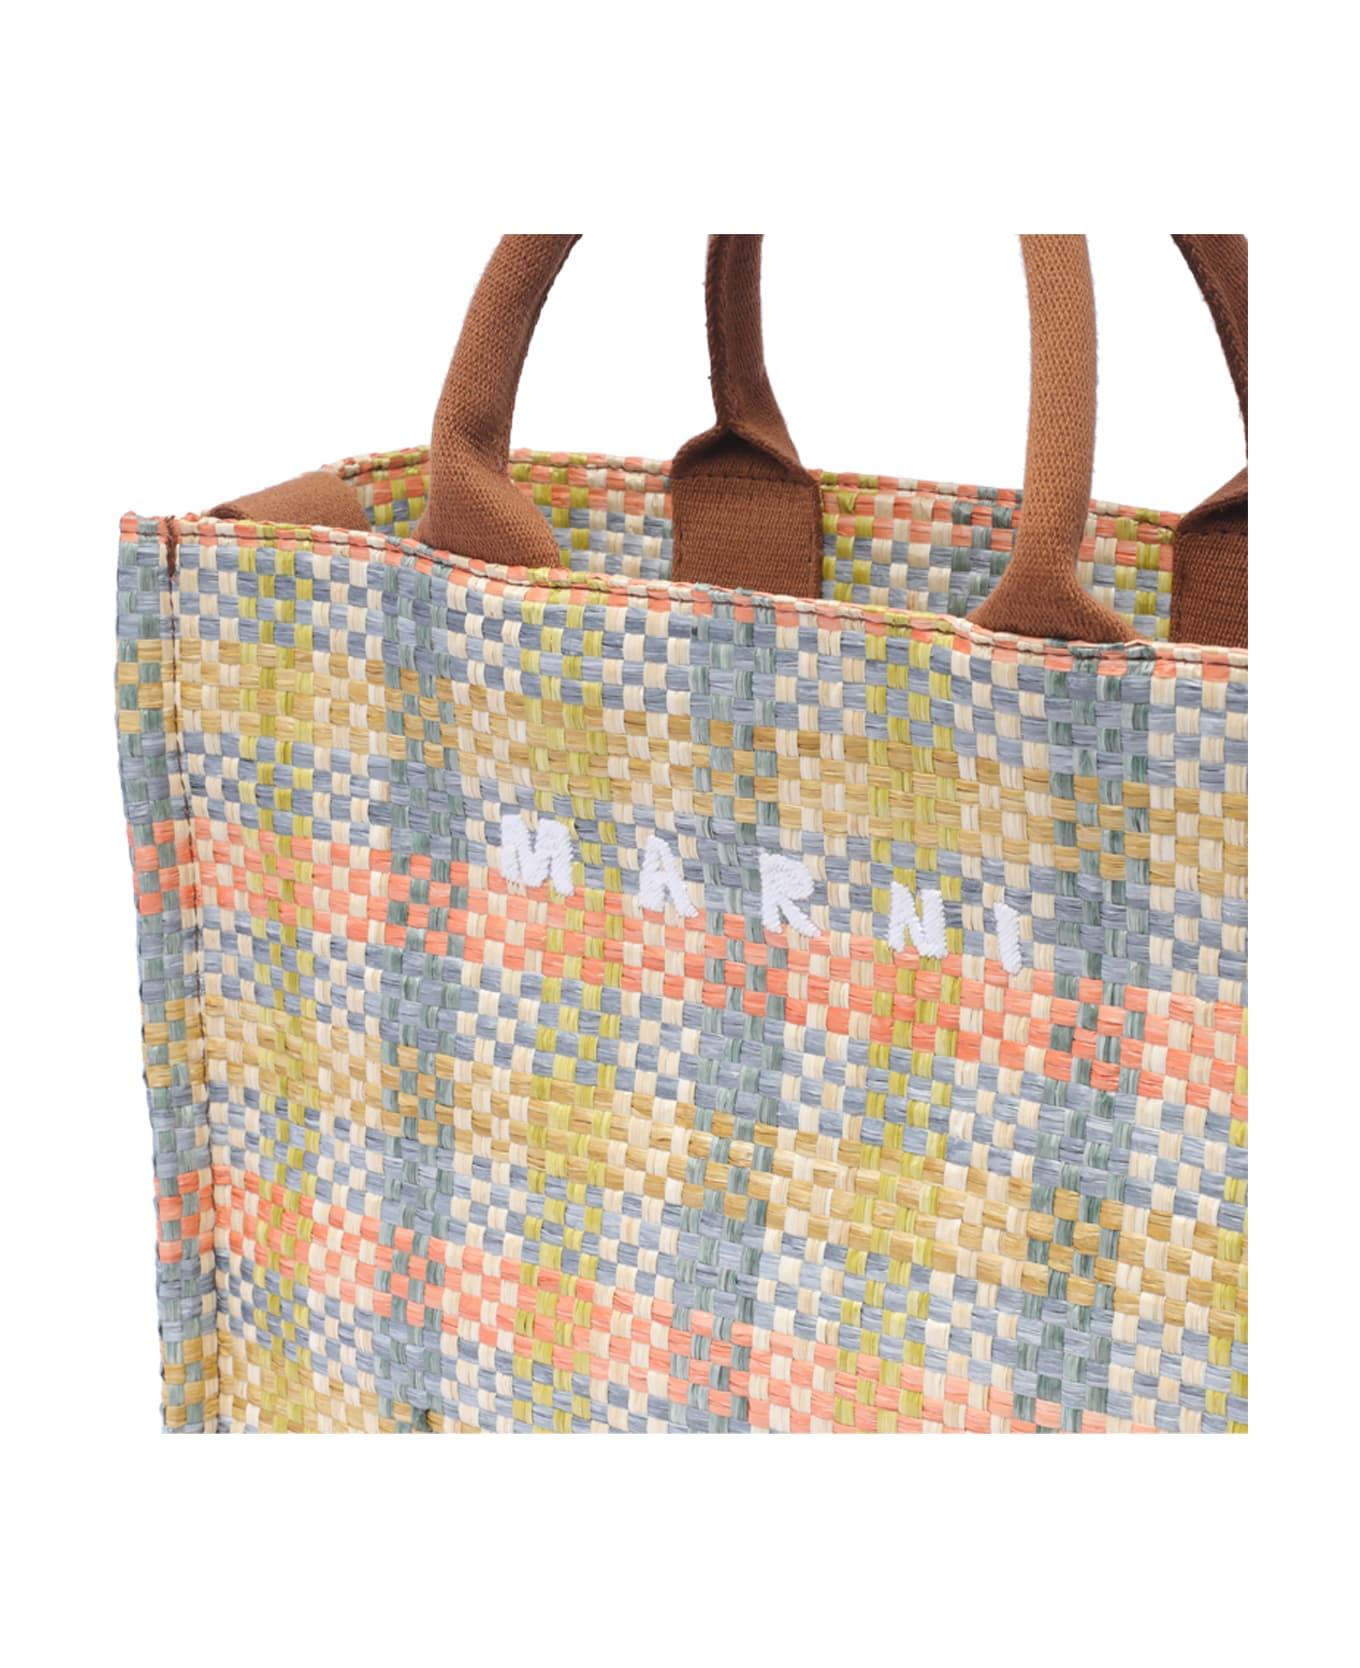 Marni Small Basket Bag Rafia Tissue - Lemon/apricot/moca